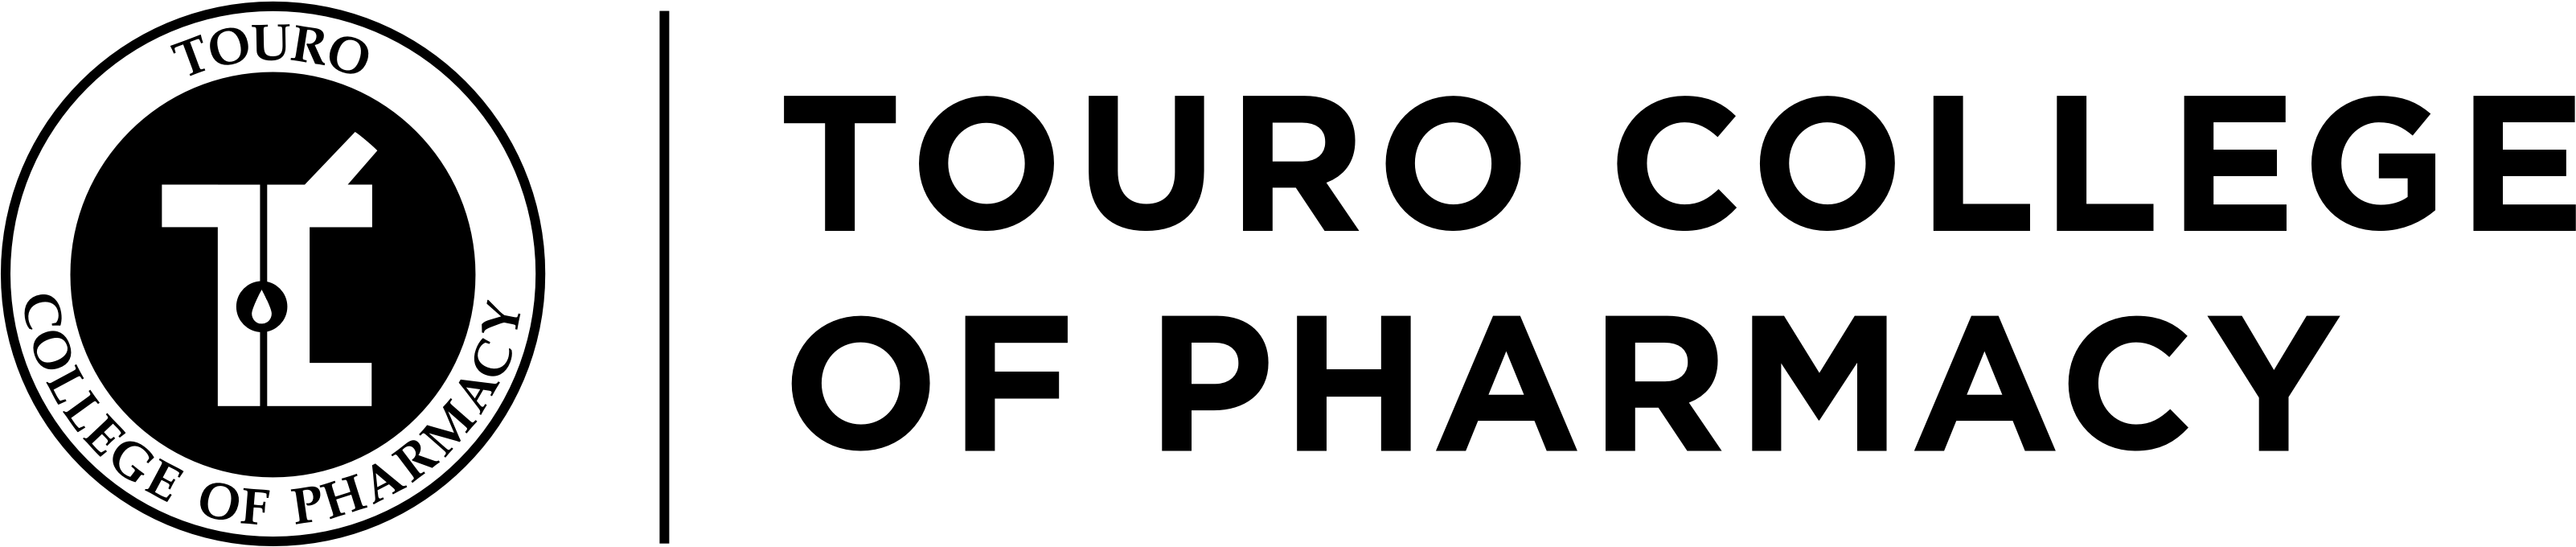 Touro College of Pharmacy